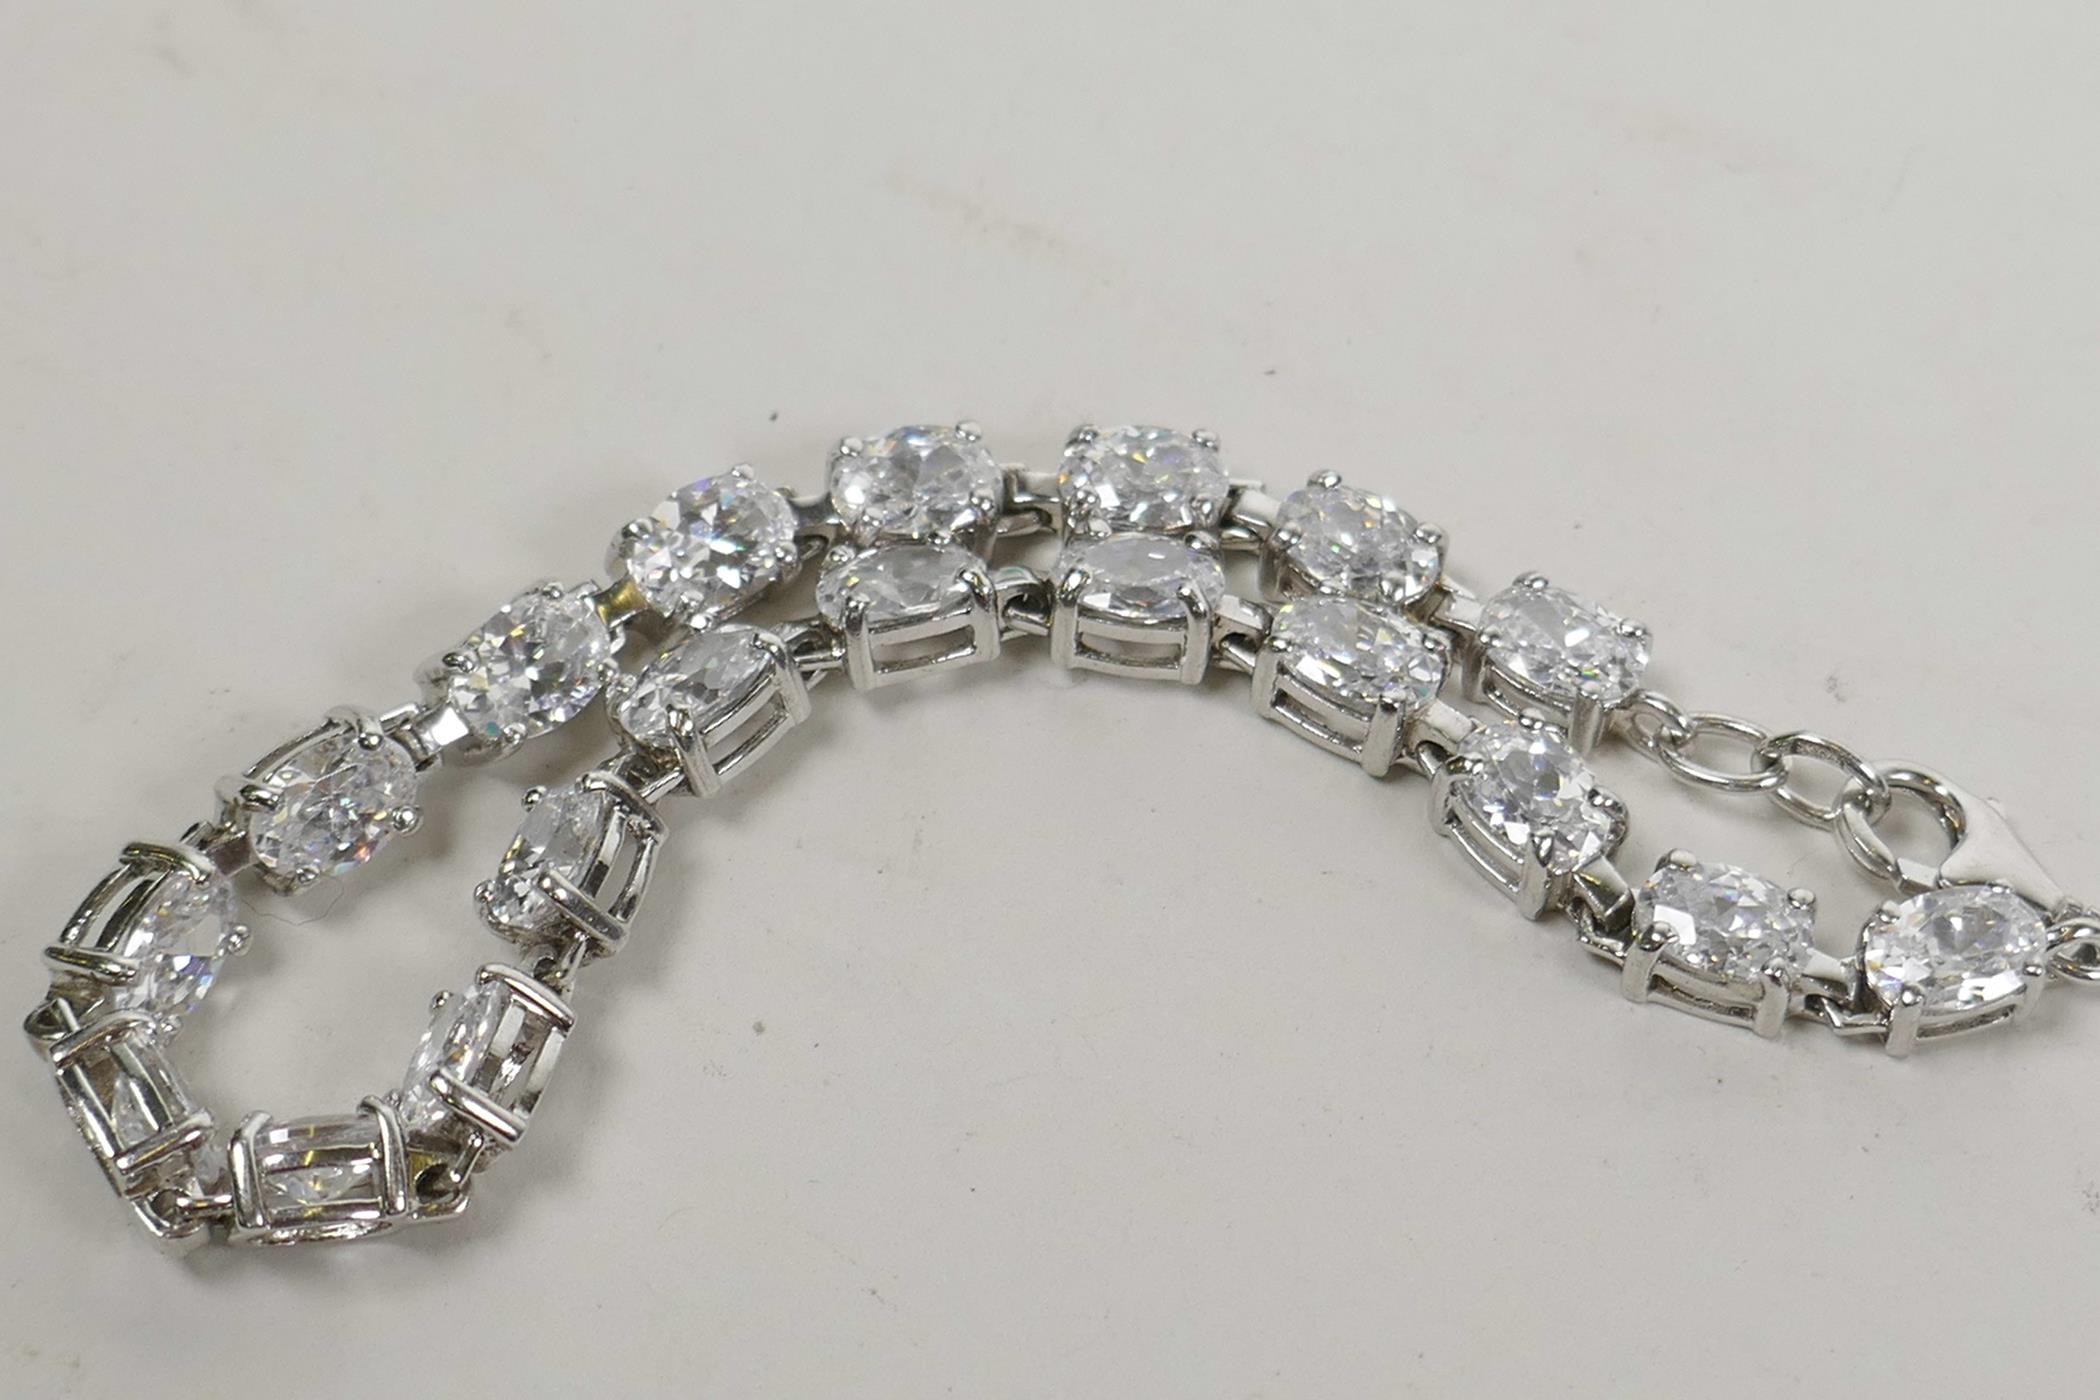 A 925 silver and cubic zirconium tennis bracelet, 8" long - Image 2 of 2